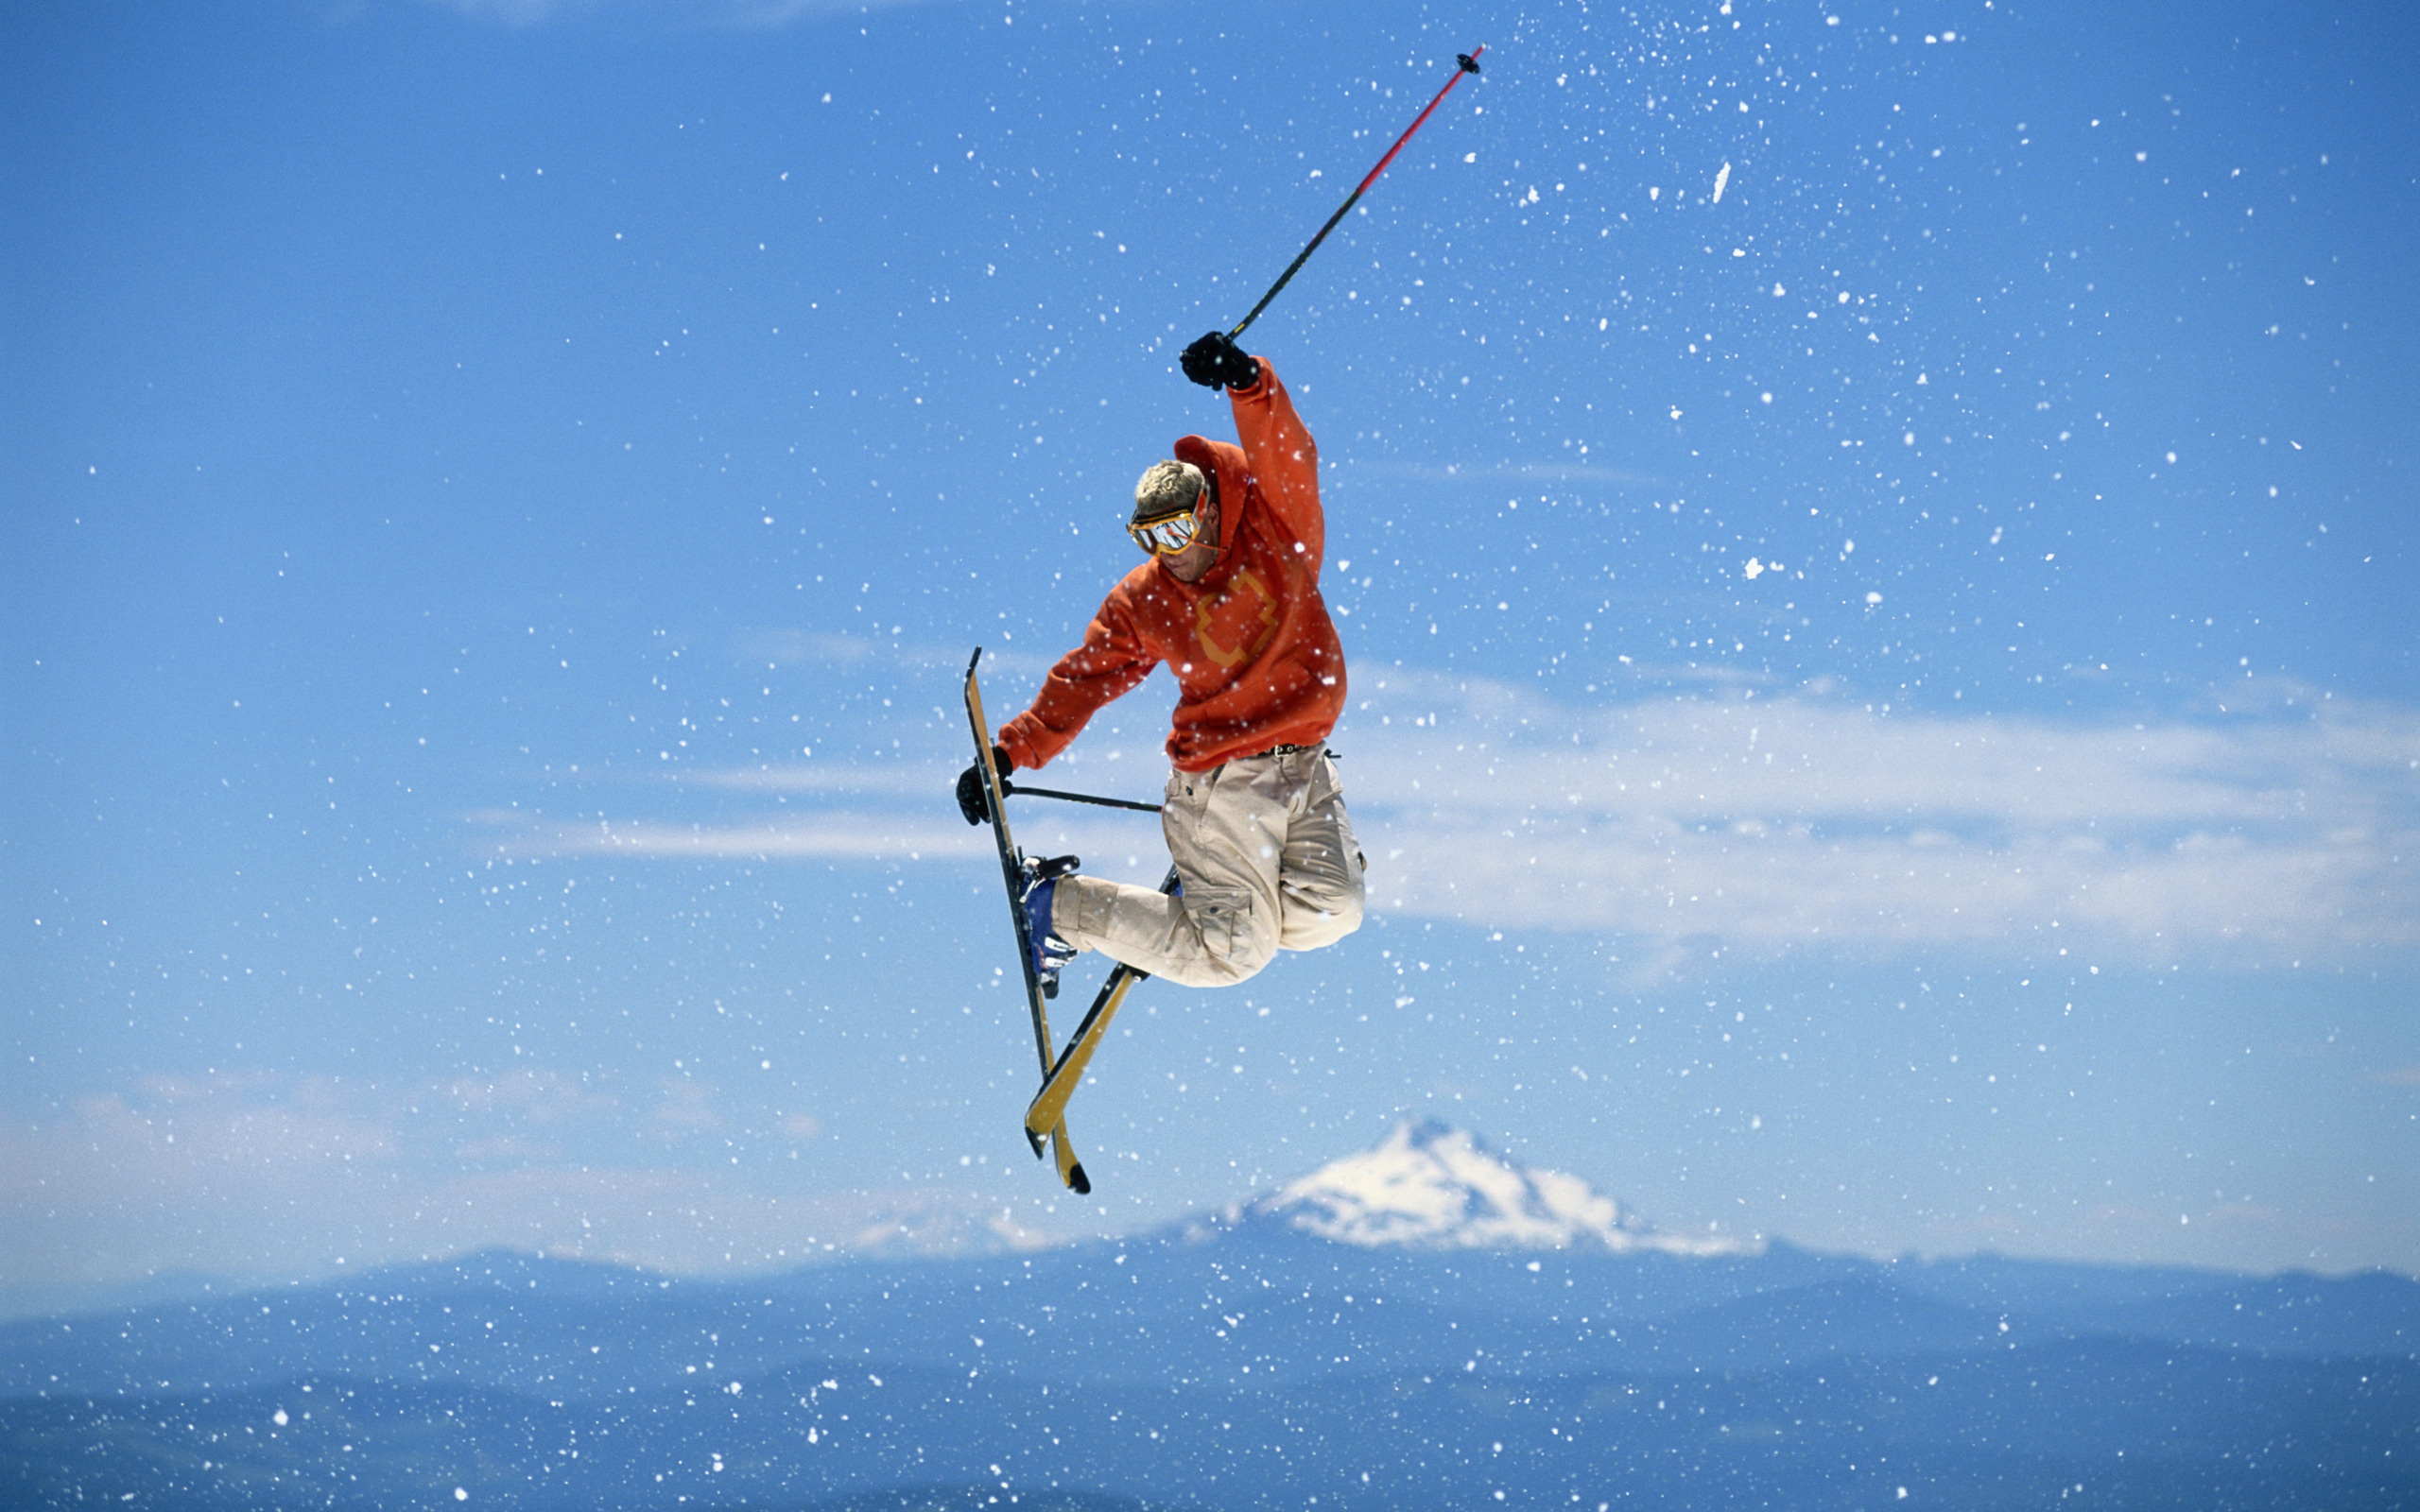 Wallpaper winter snow skiing sky extreme freestyle desktop